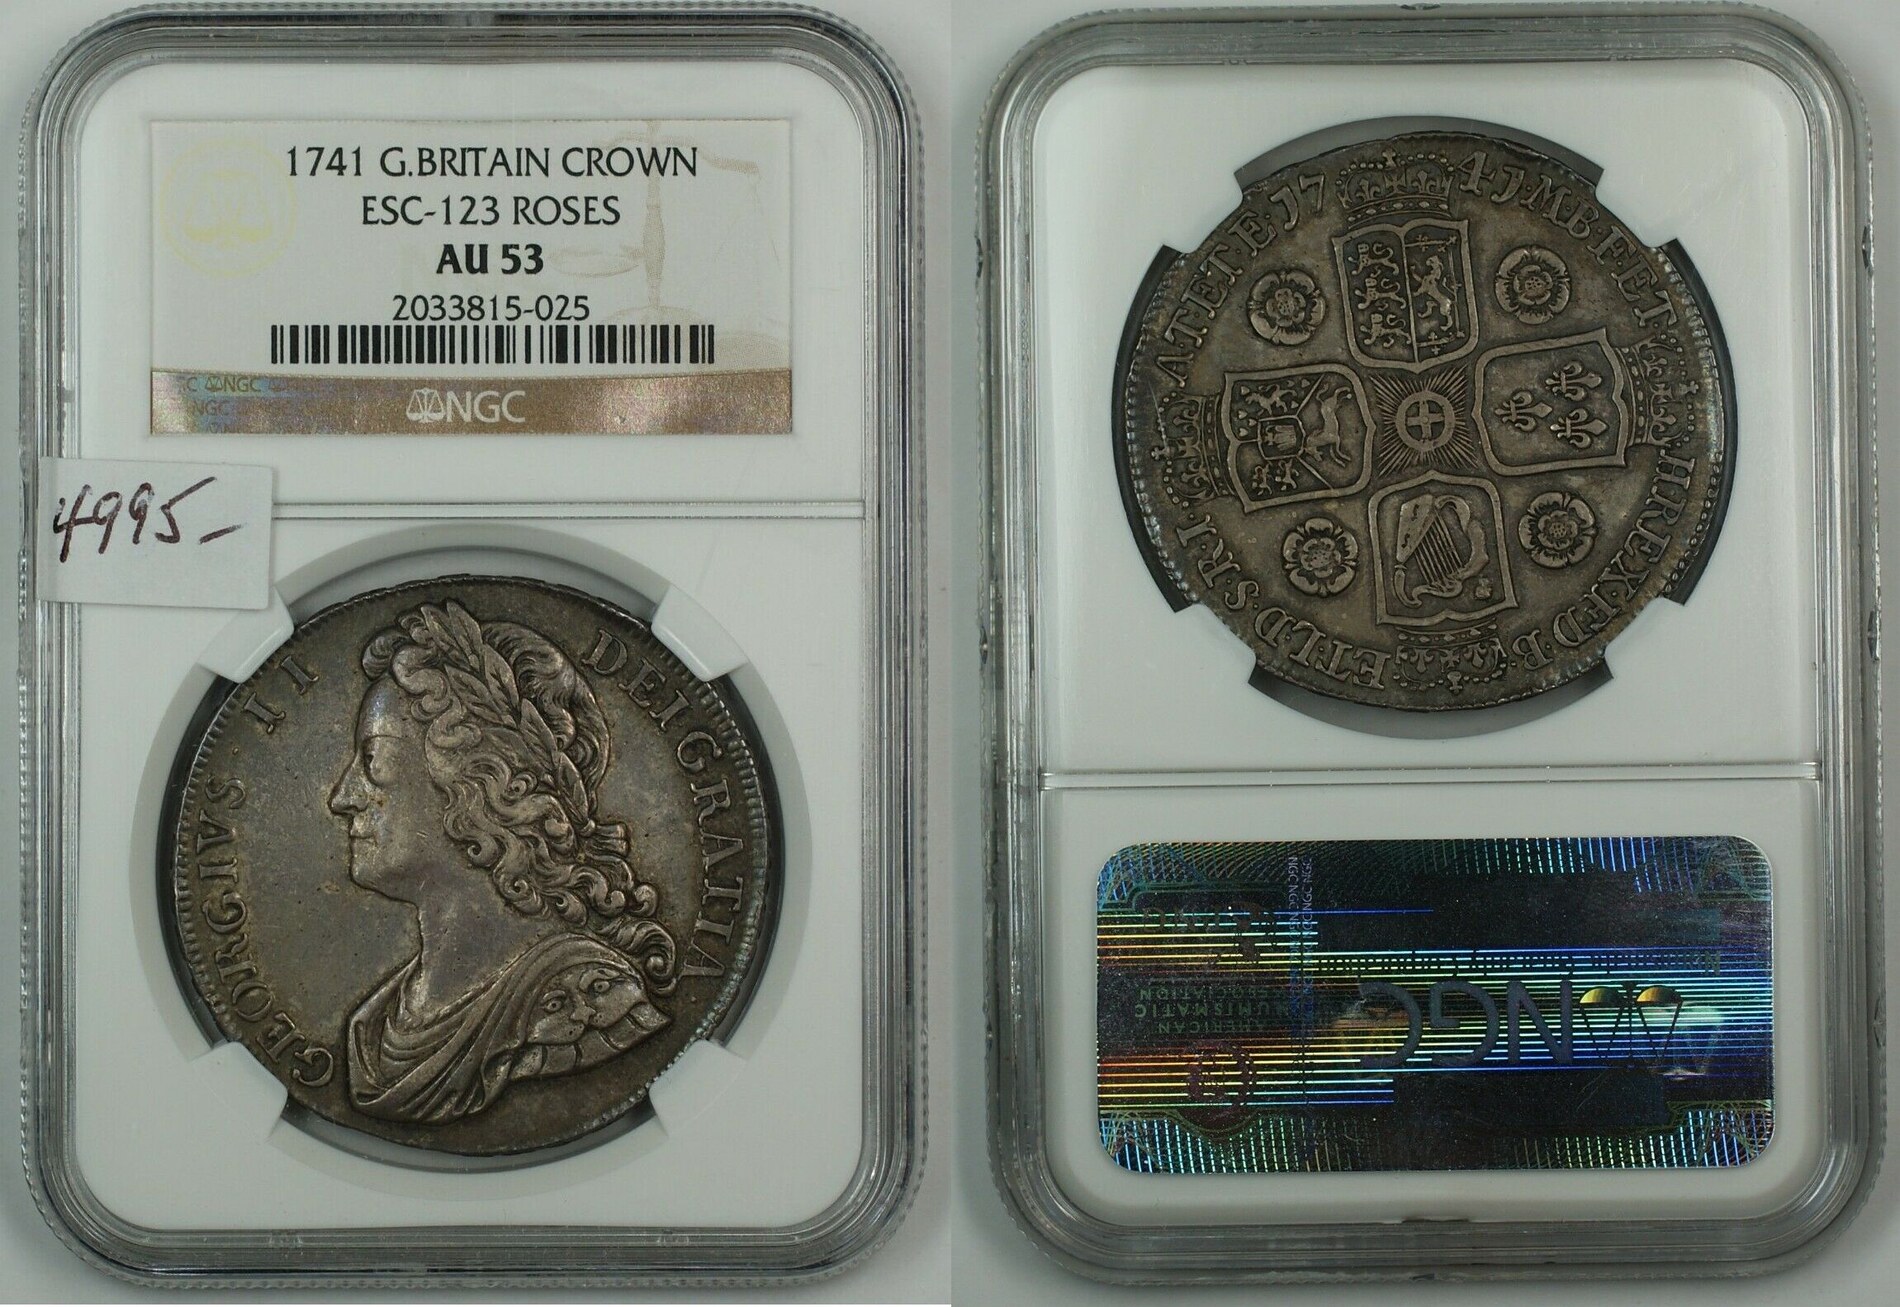 Weltmünzen Crown 1741 Great Britain Silver Coin ESC-123 Roses NGC AU-53 ...